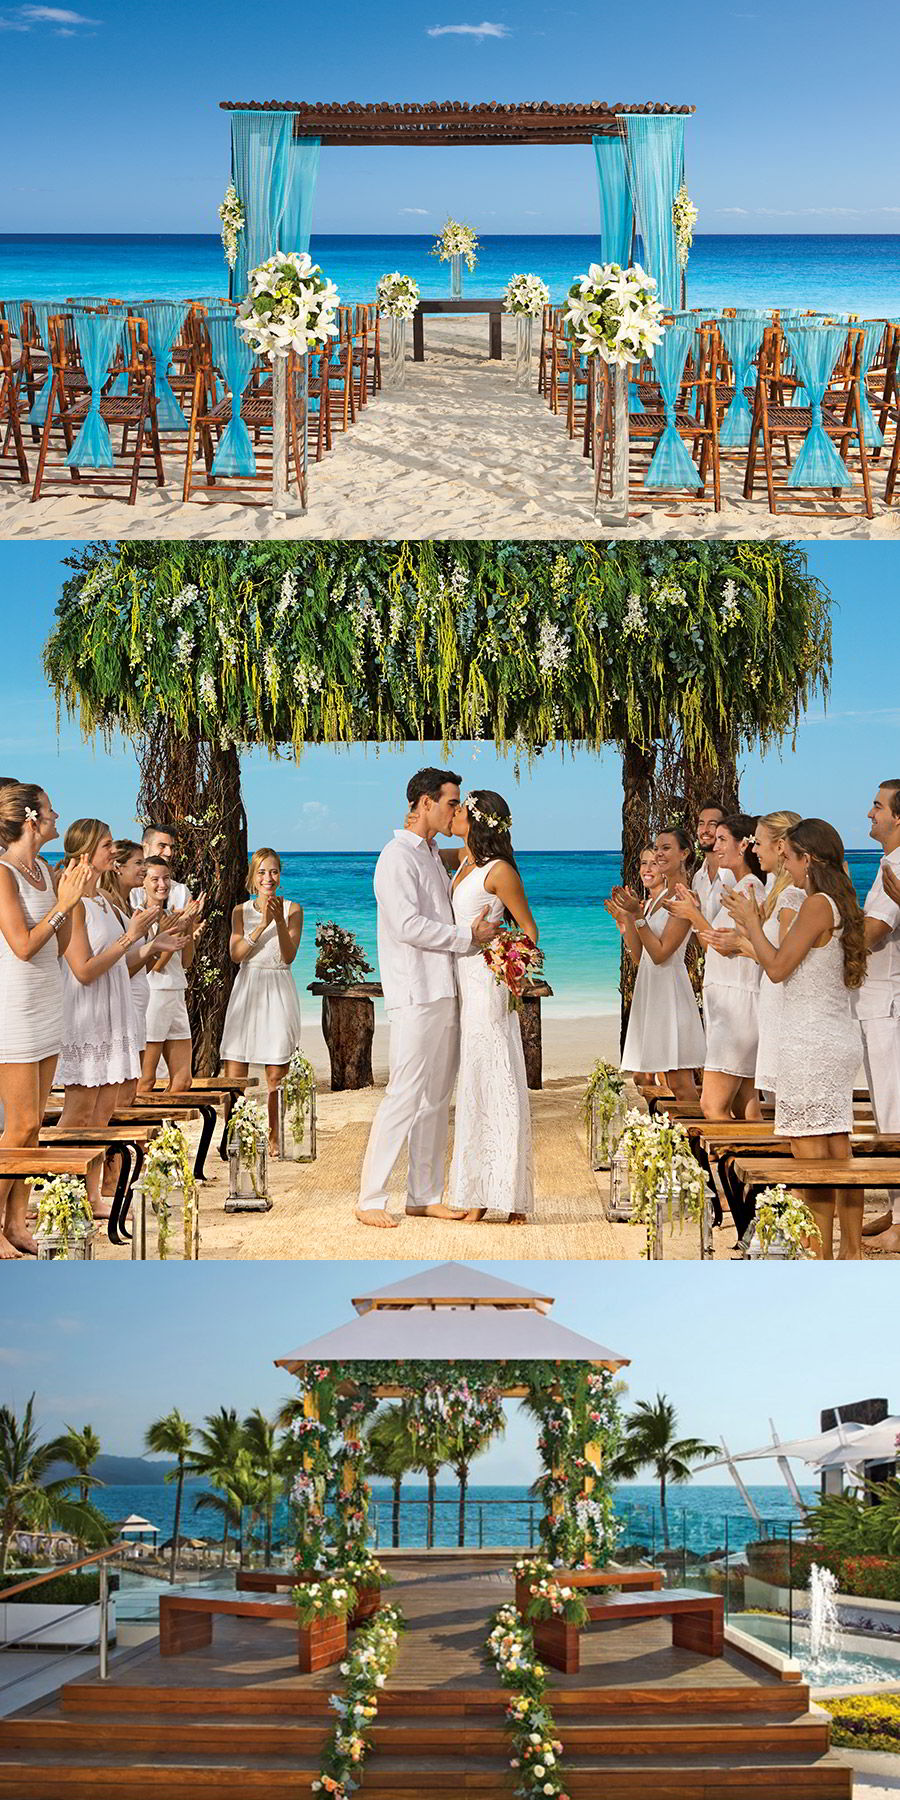 secrets resorts caribbean beach destination wedding luxury honeymoon beachfront barefoot wedding venue boho chic bohemian style beach nuptials capri akumal vallarta